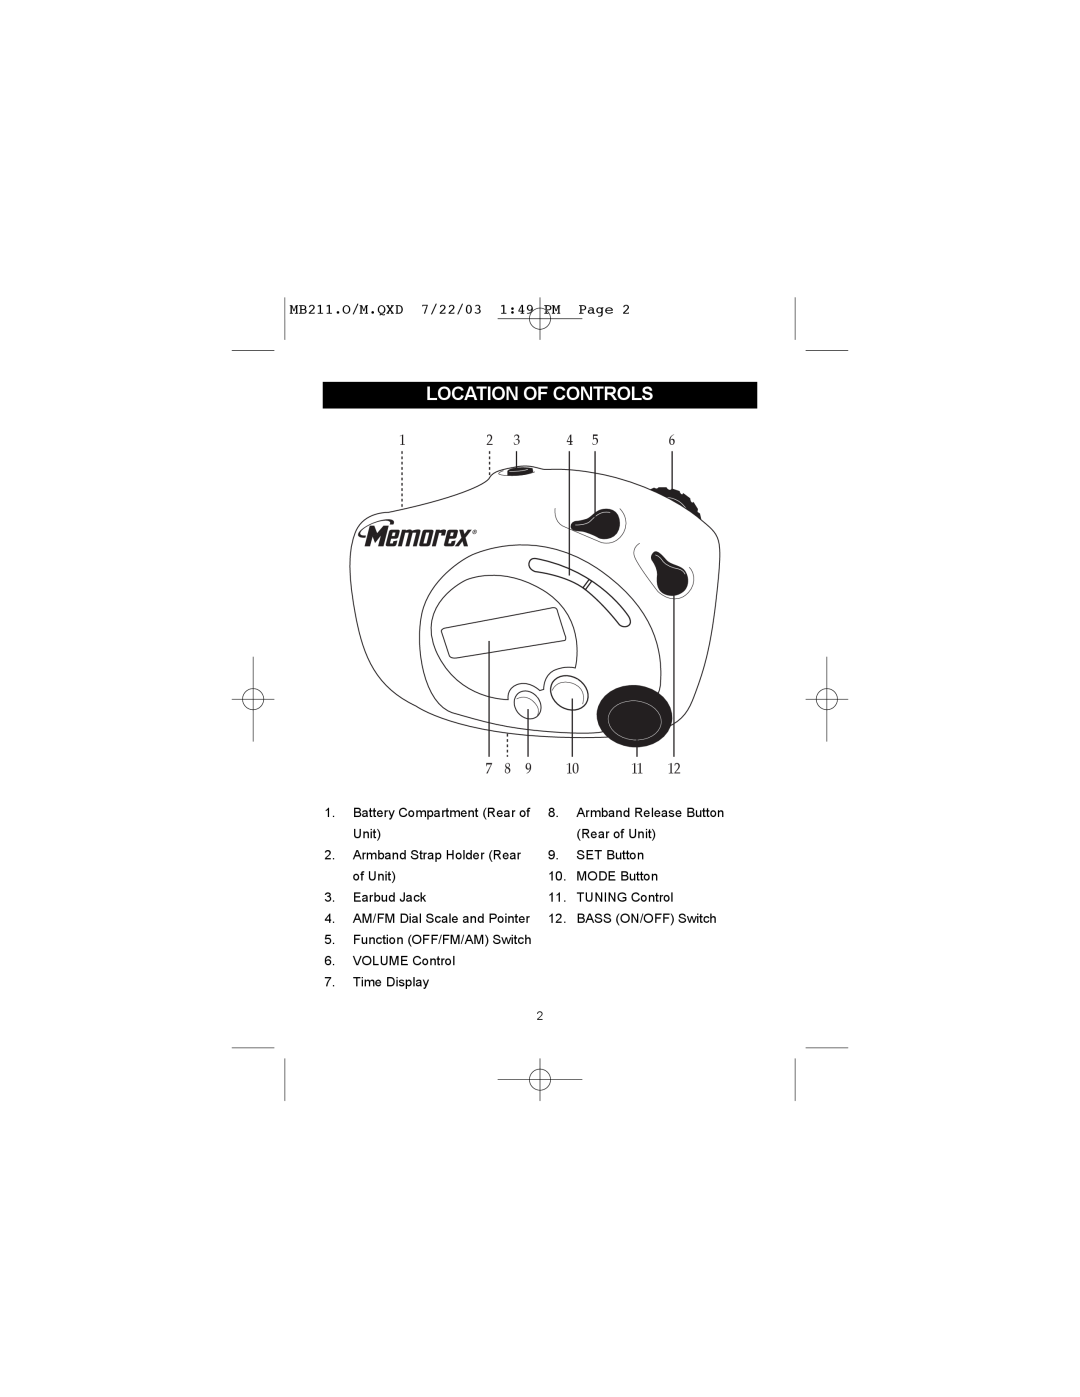 Memorex manual Location Of Controls, MB211.O/M.QXD 7/22/03 1 49 PM Page 